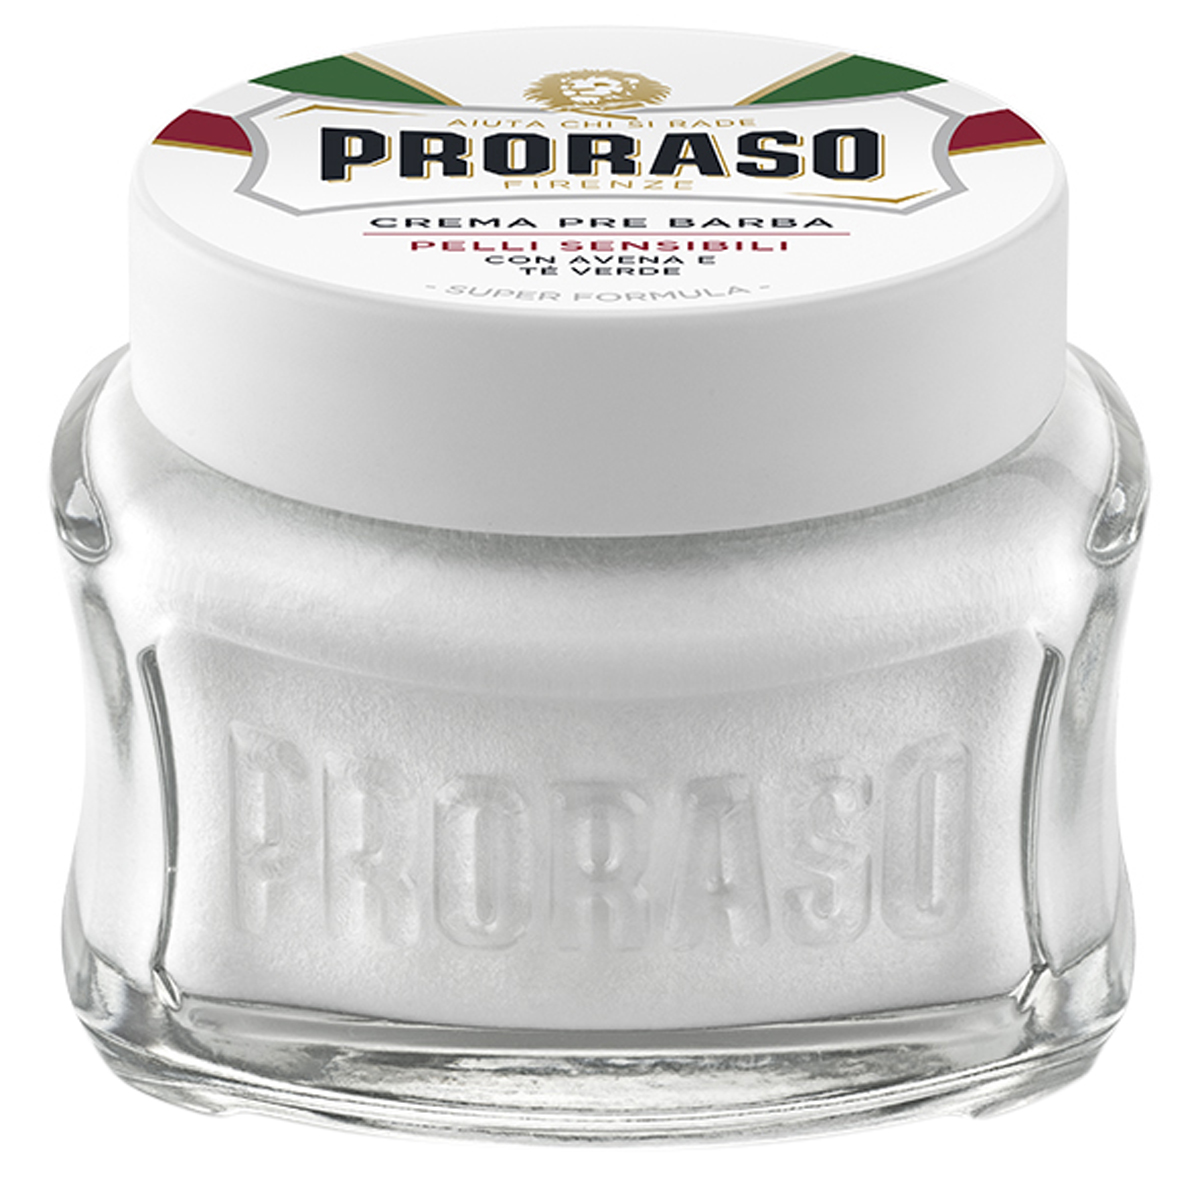 Preshave Cream